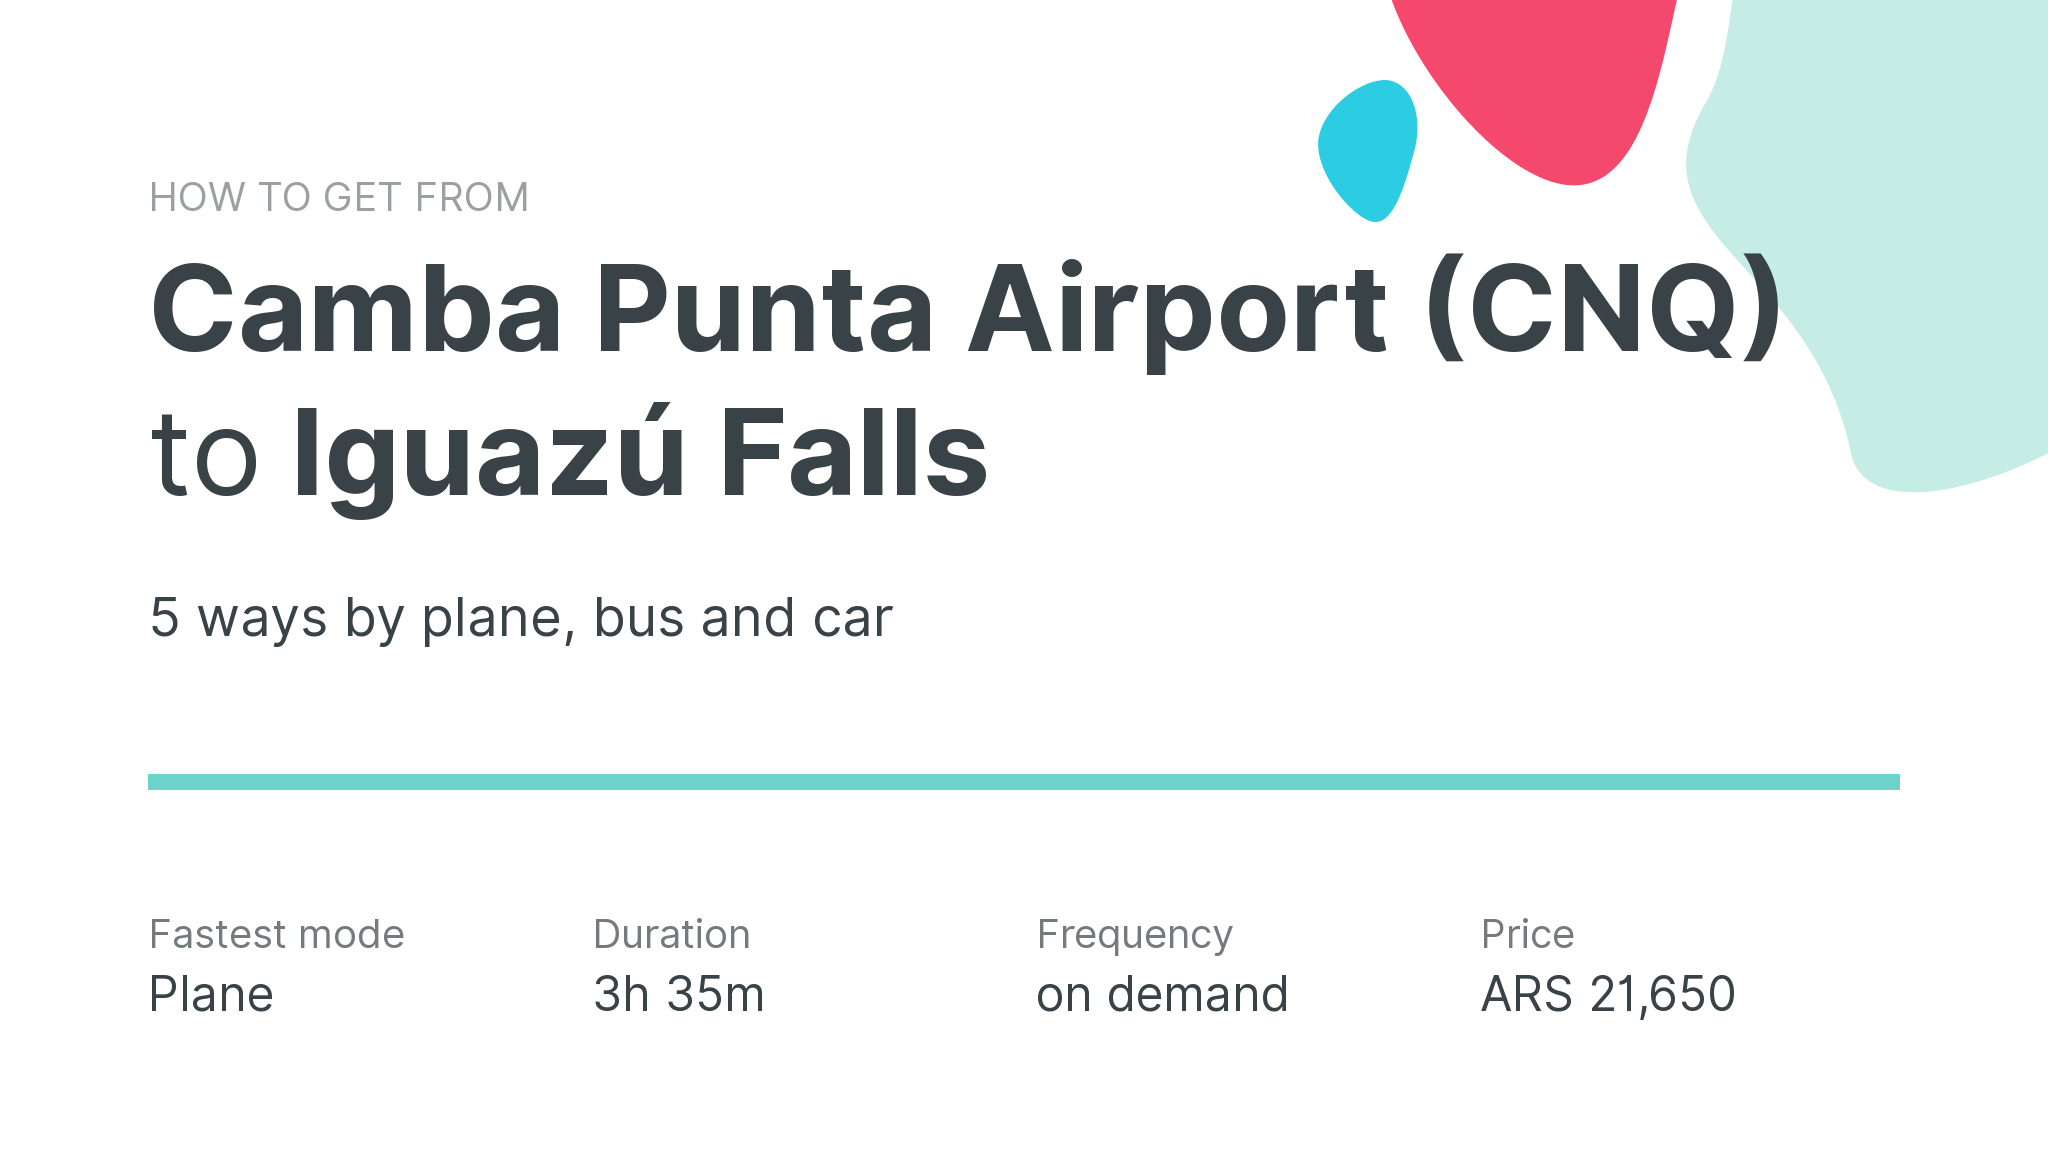 How do I get from Camba Punta Airport (CNQ) to Iguazú Falls